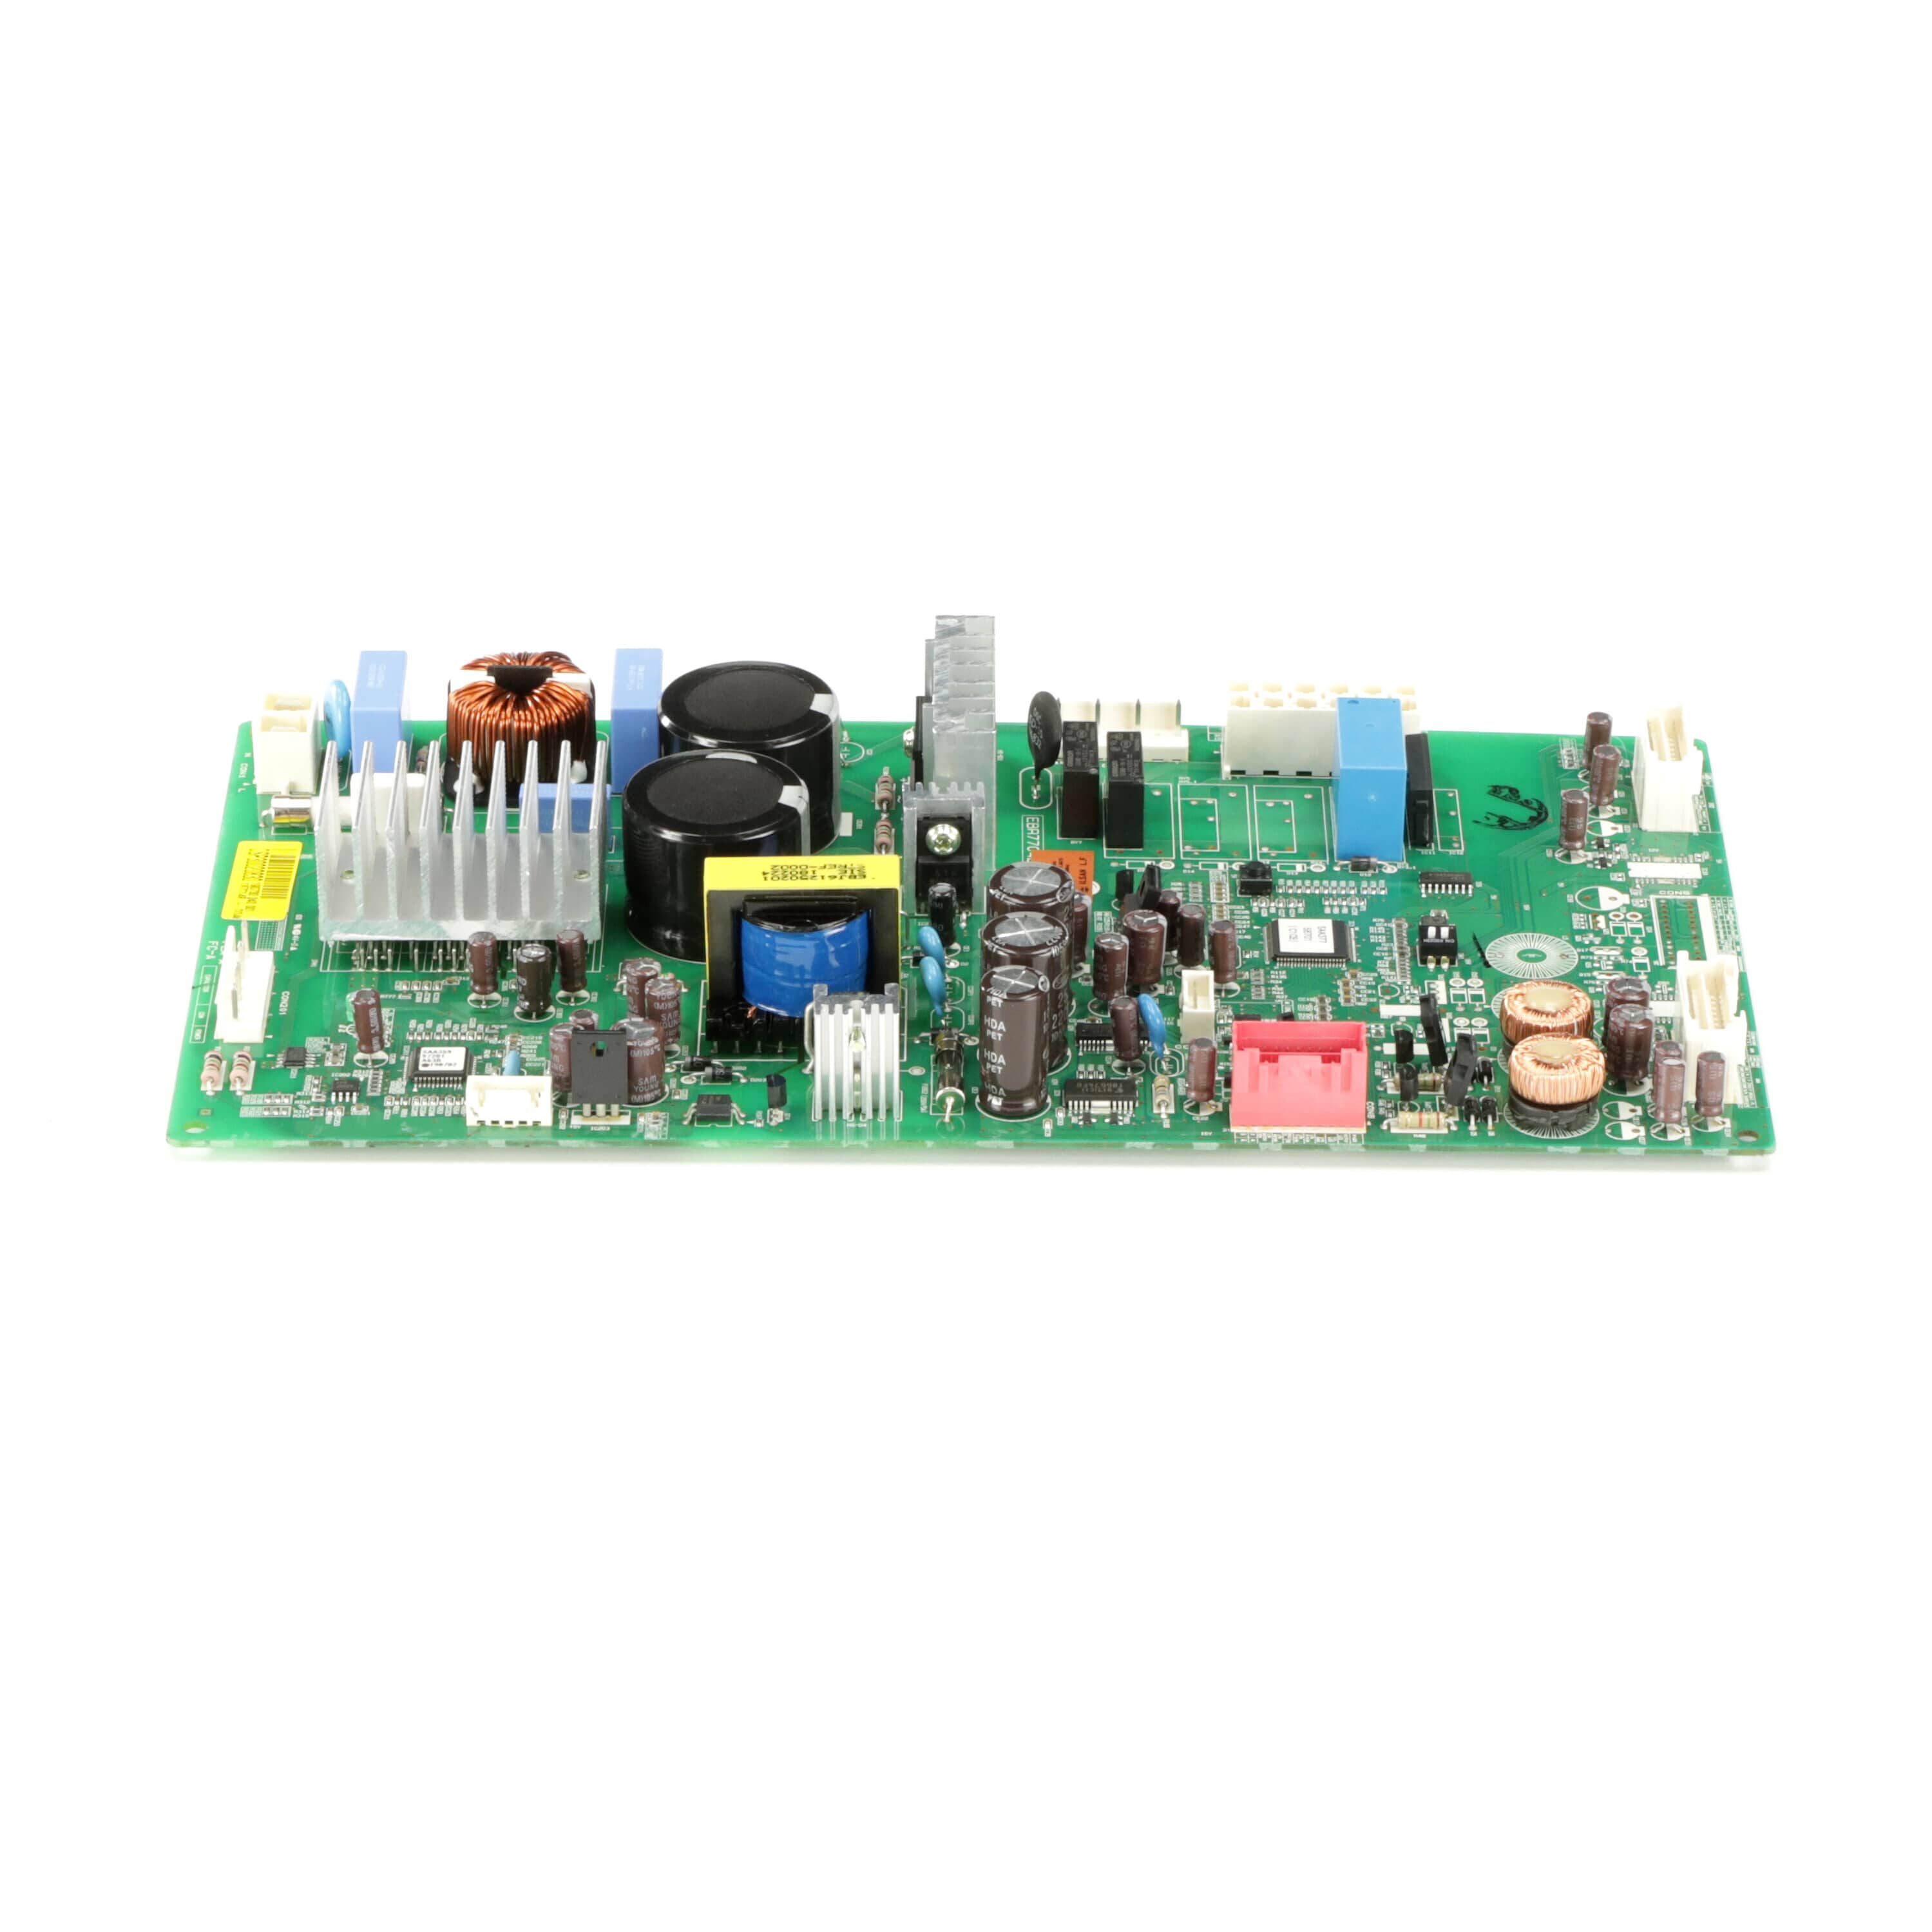 LG CSP30020830 Refrigerator Electronic Control Board